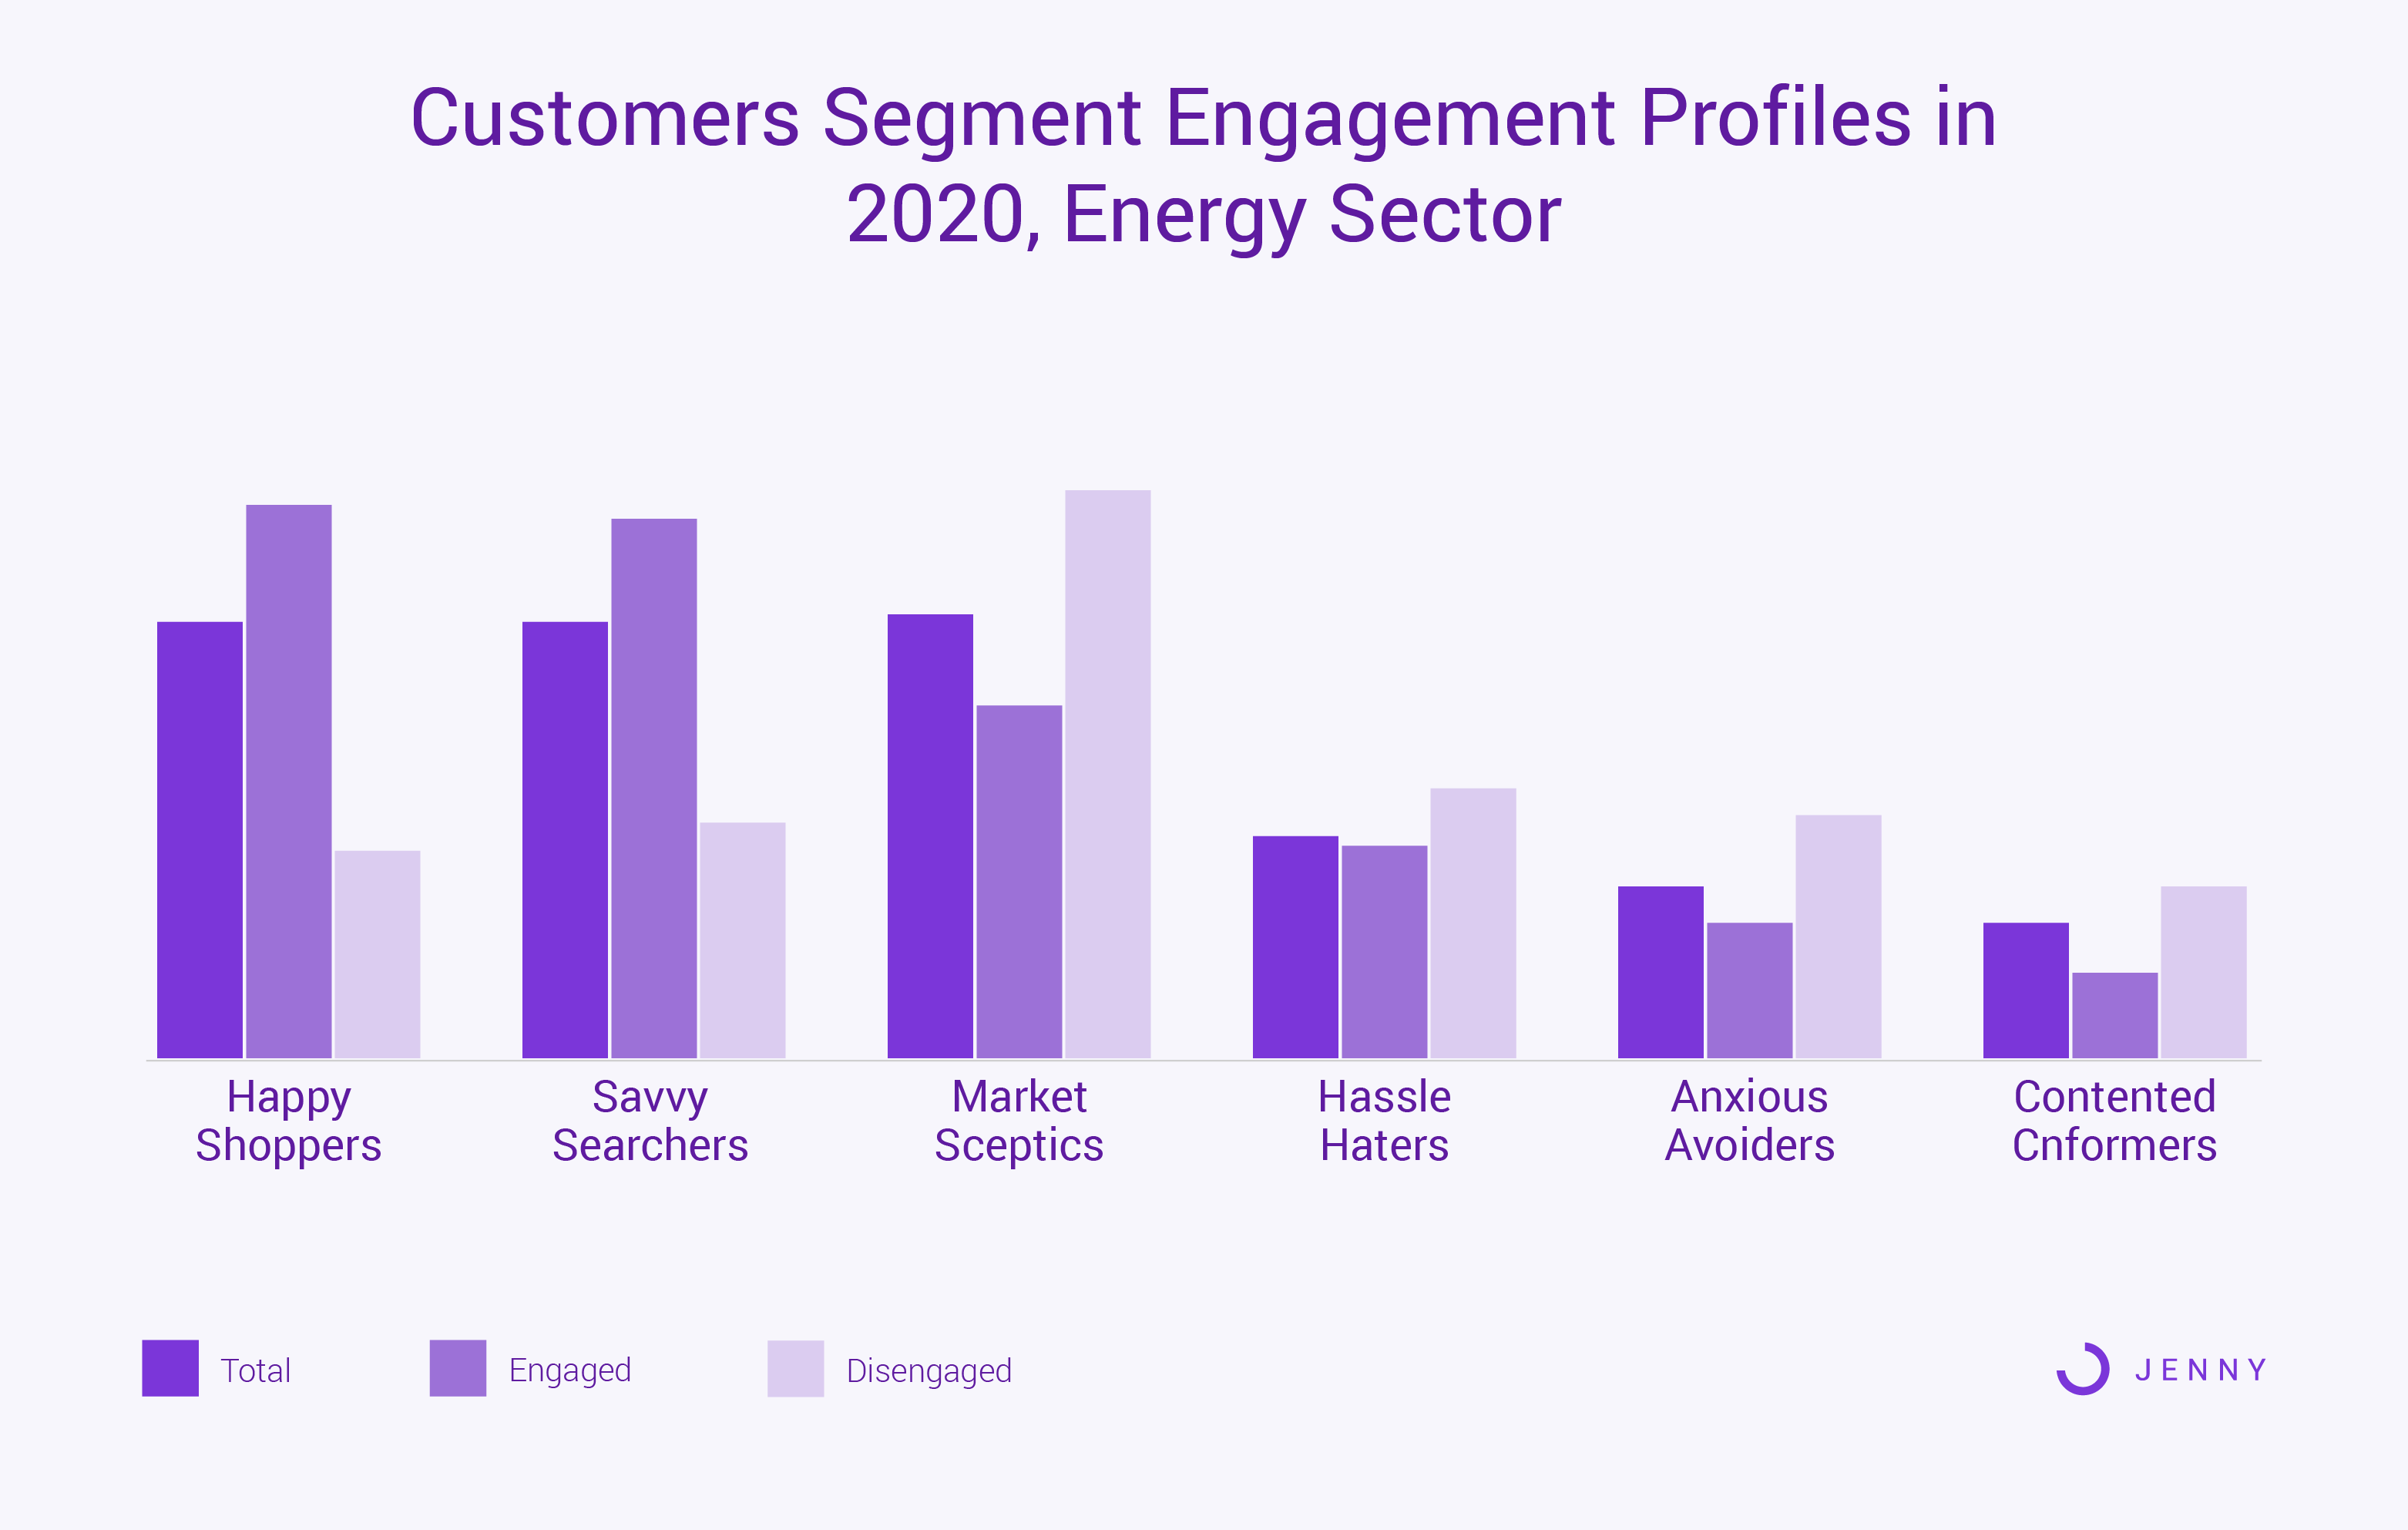 energy sector customers segment getjenny-01